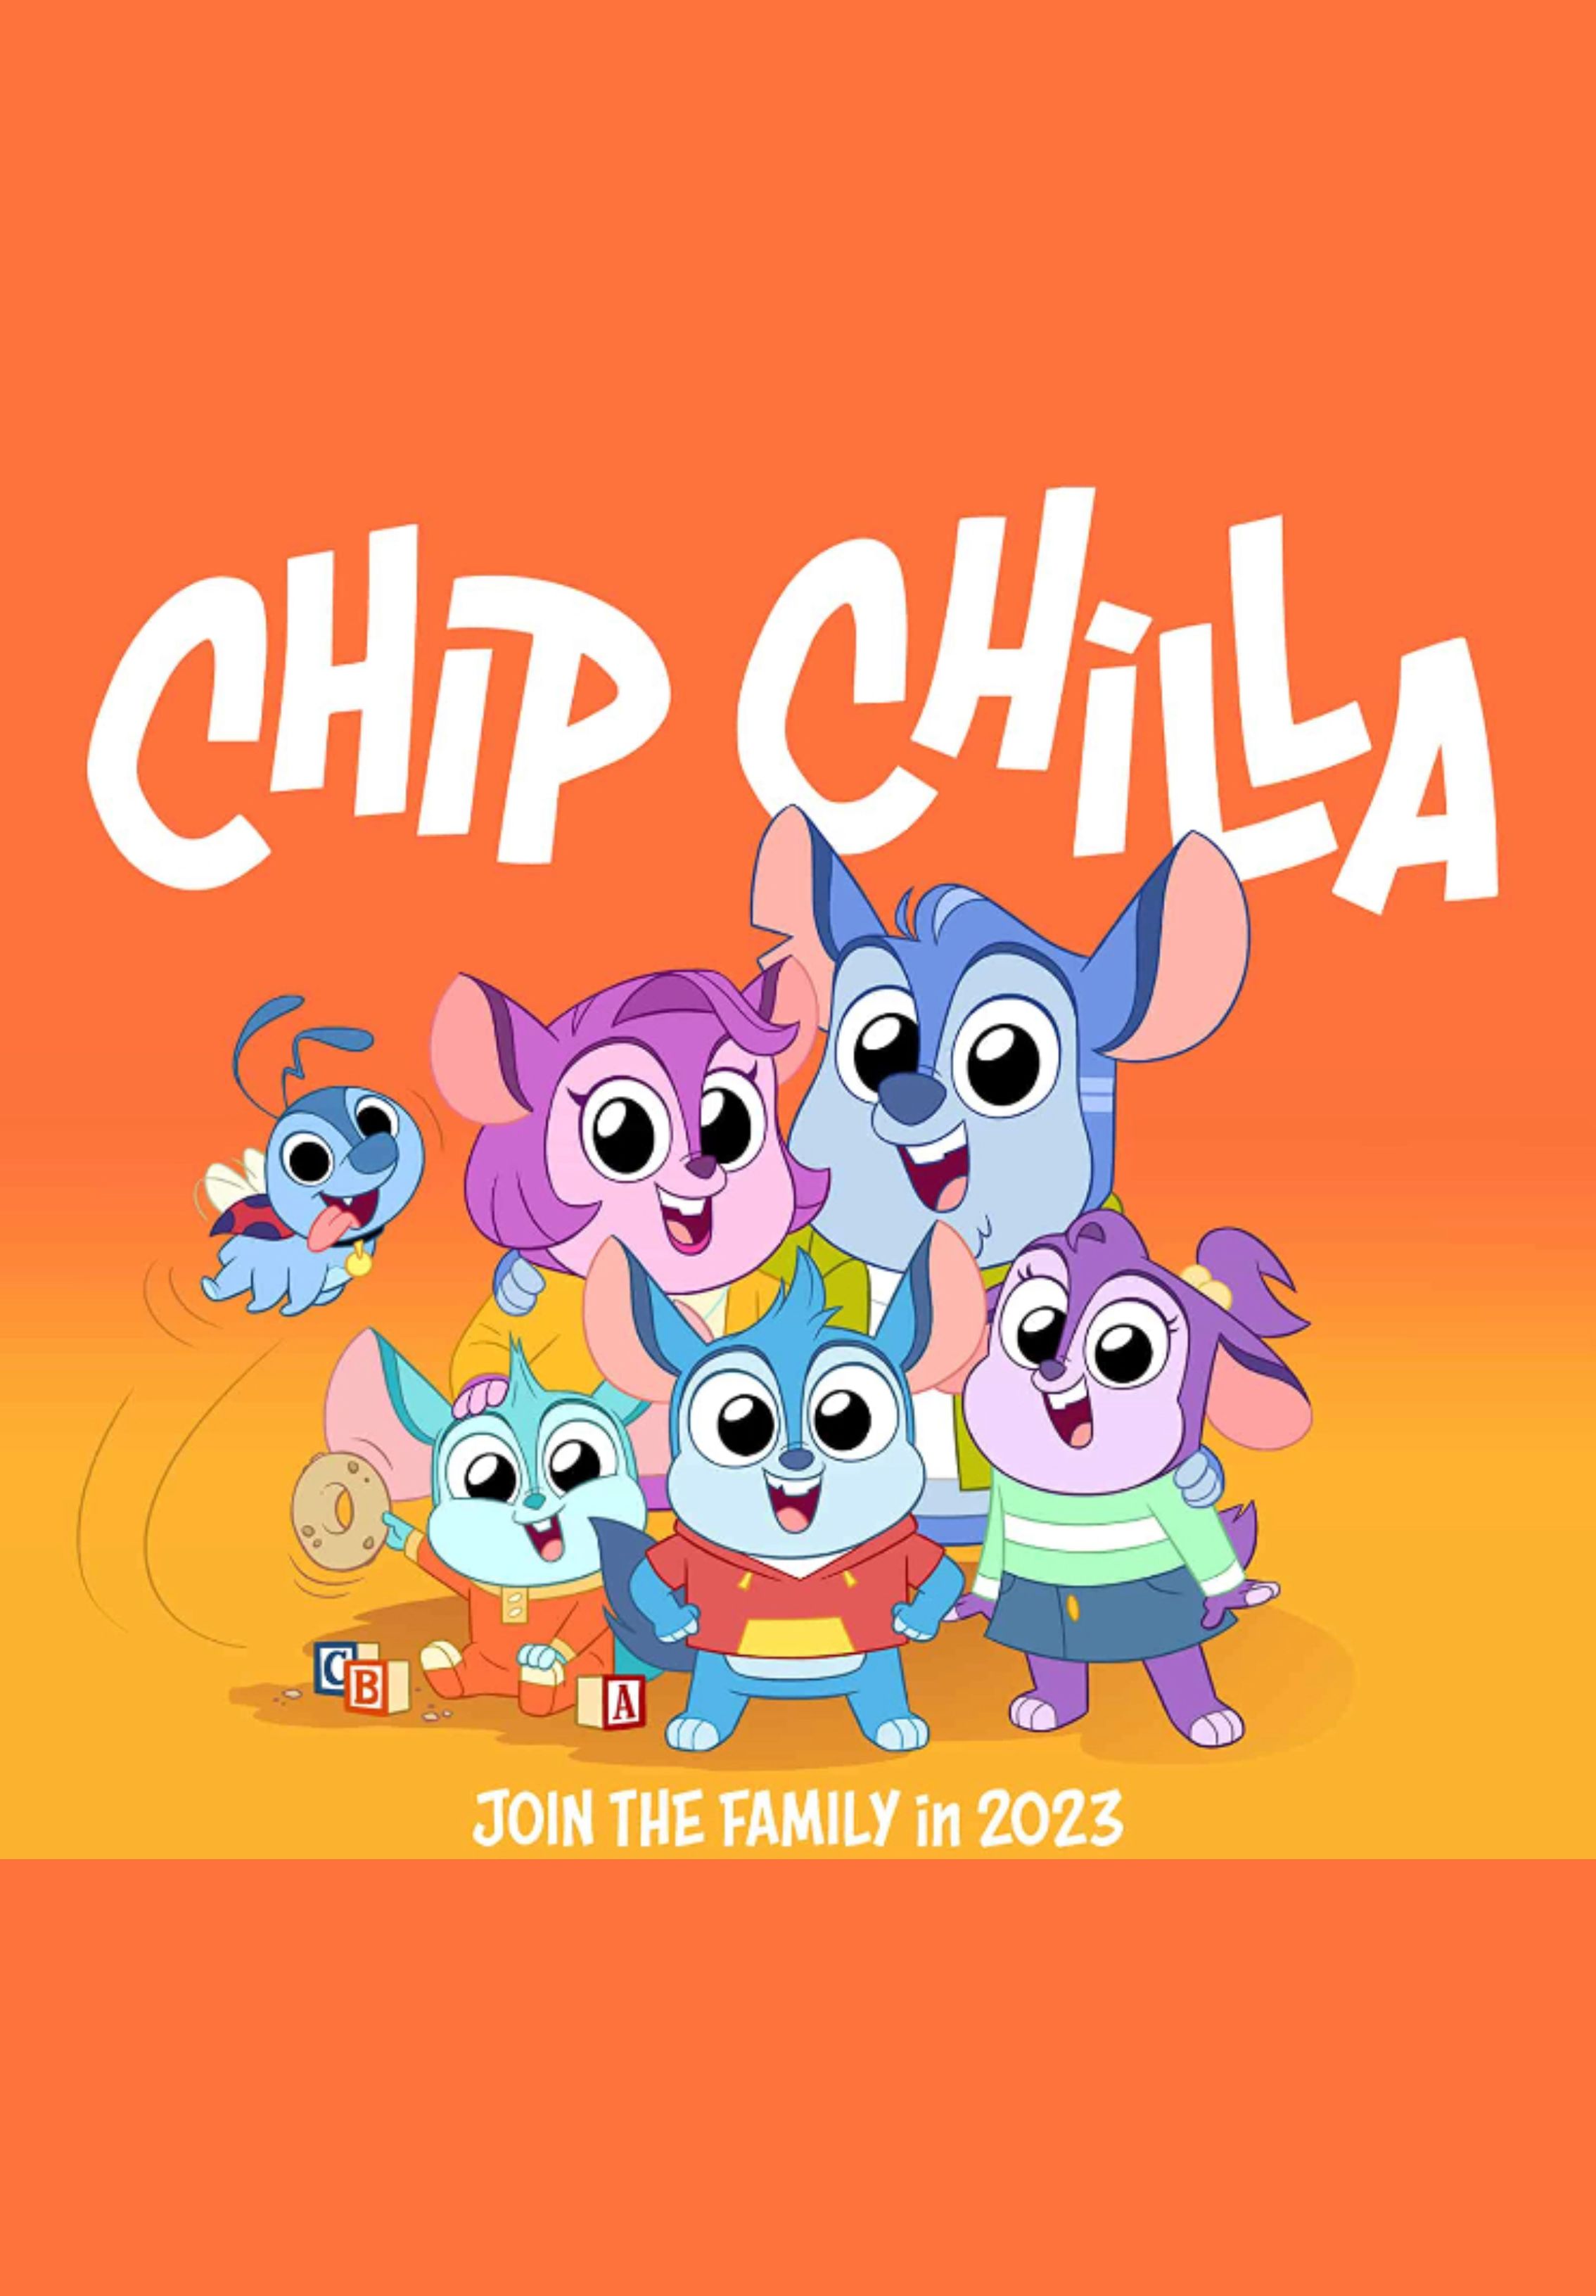 Chip Chilla